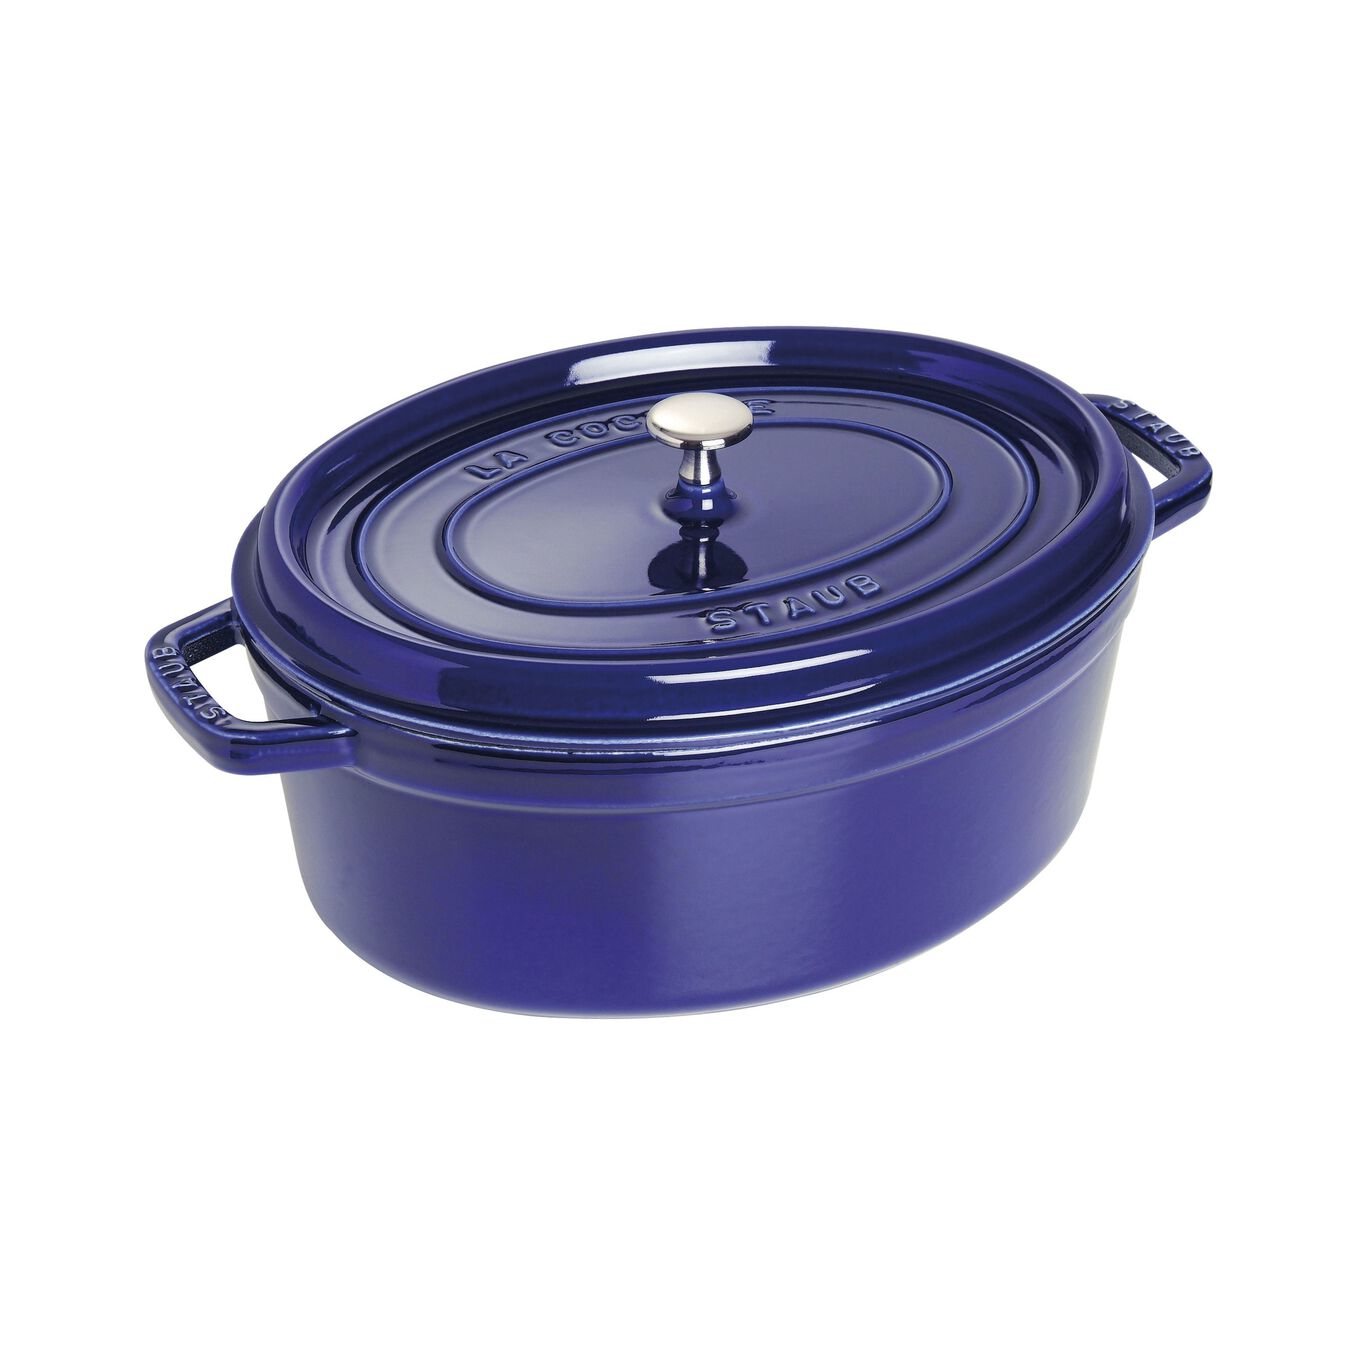 5.5 l cast iron oval Cocotte, dark-blue,,large 1